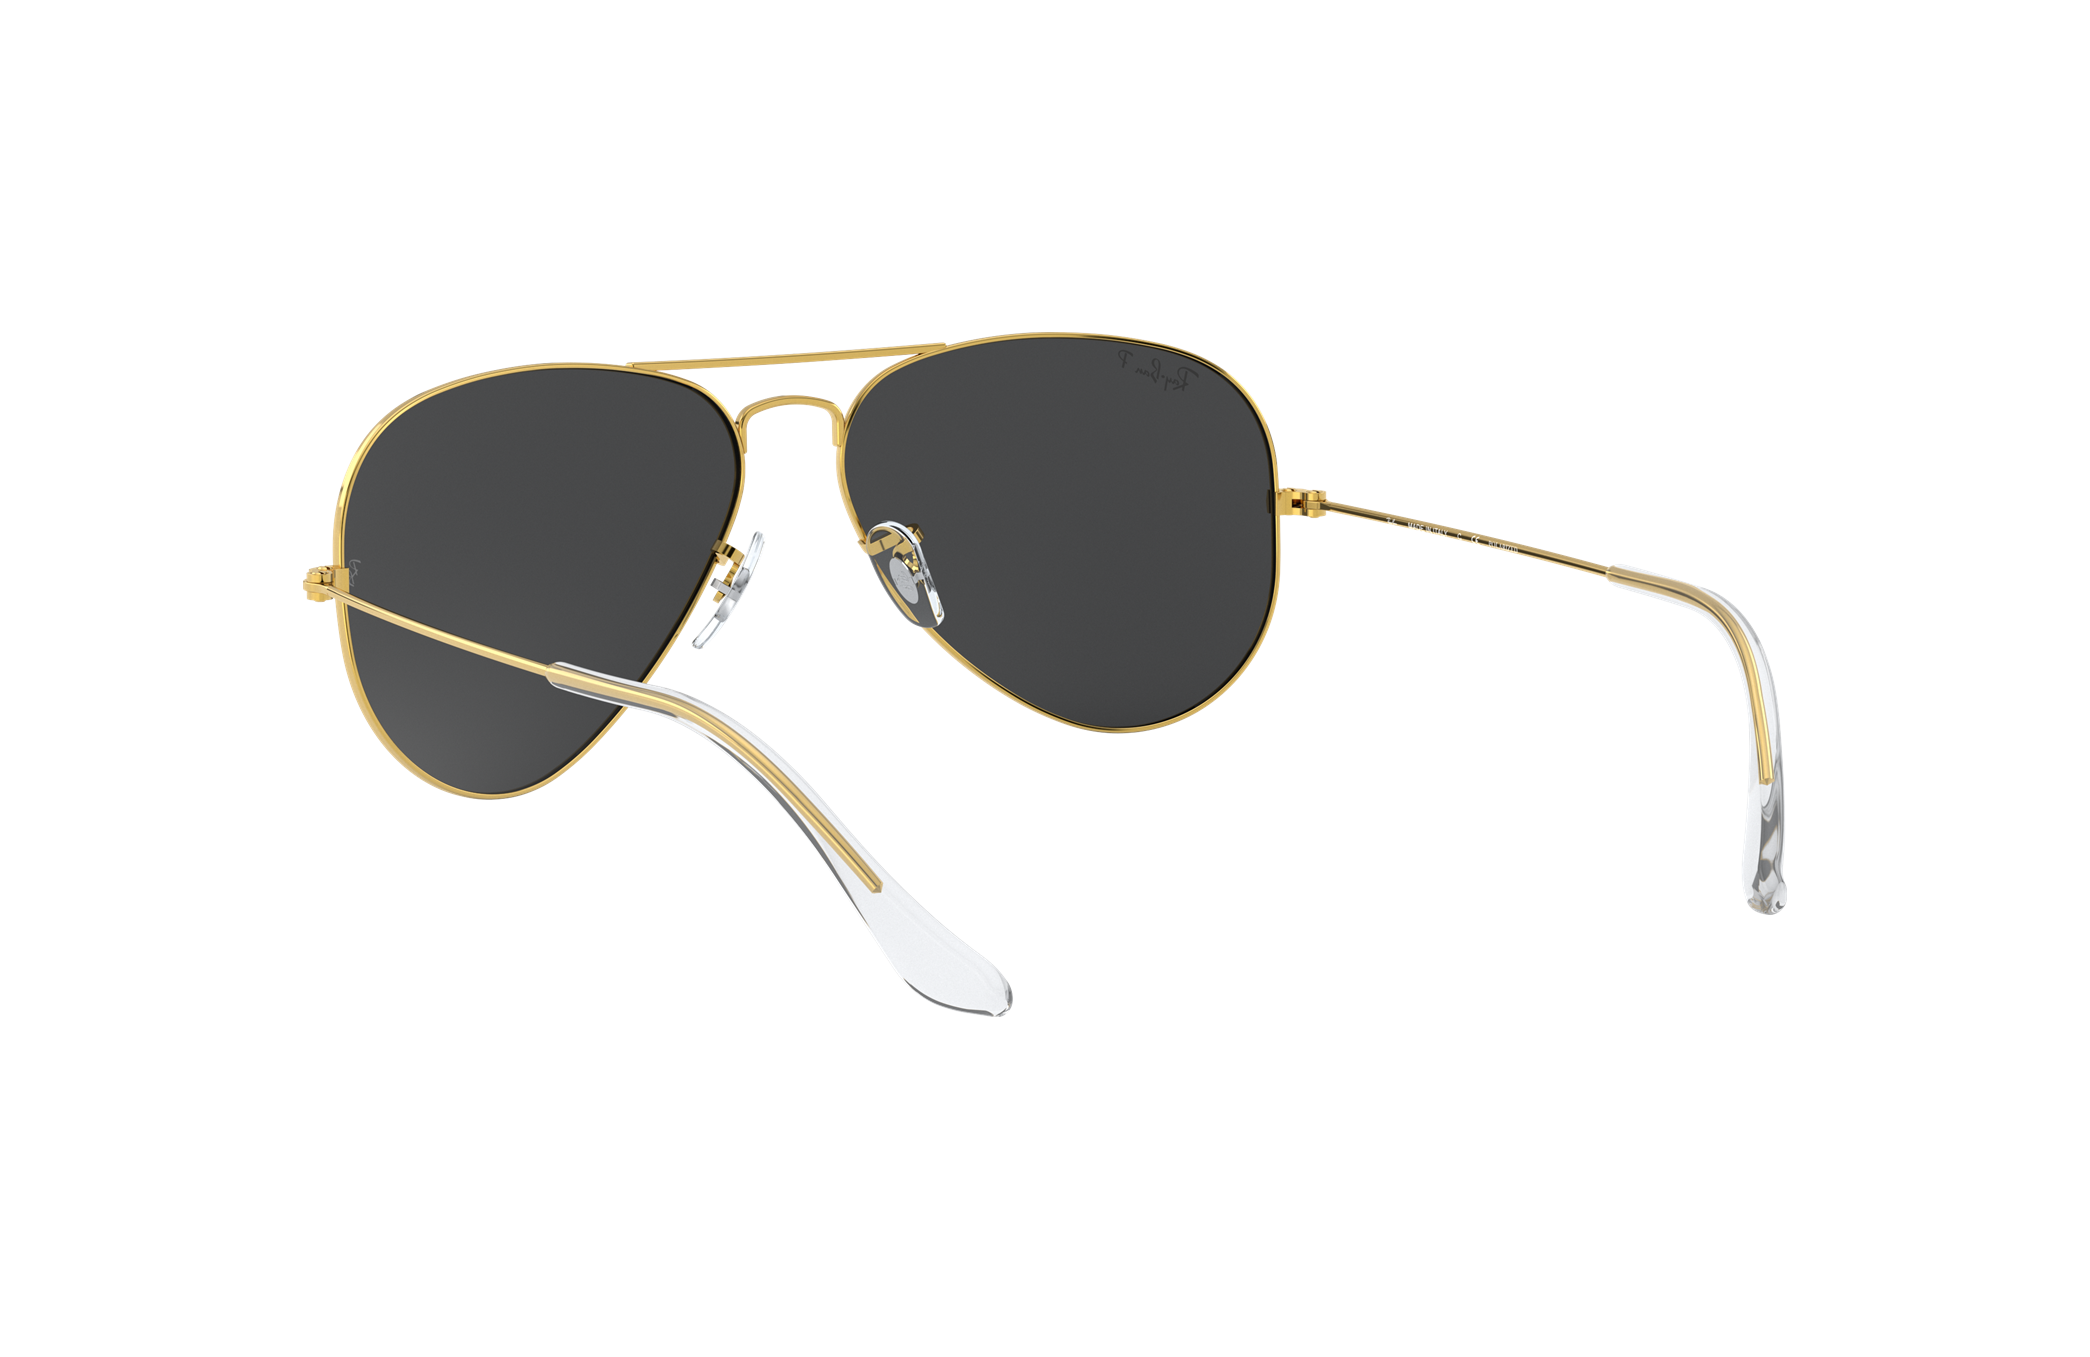 Dita Eyewear aviator sunglasses - BLK/ GLD BLACK IRON YELLOW GOLD W/ GOLDEN AMBER